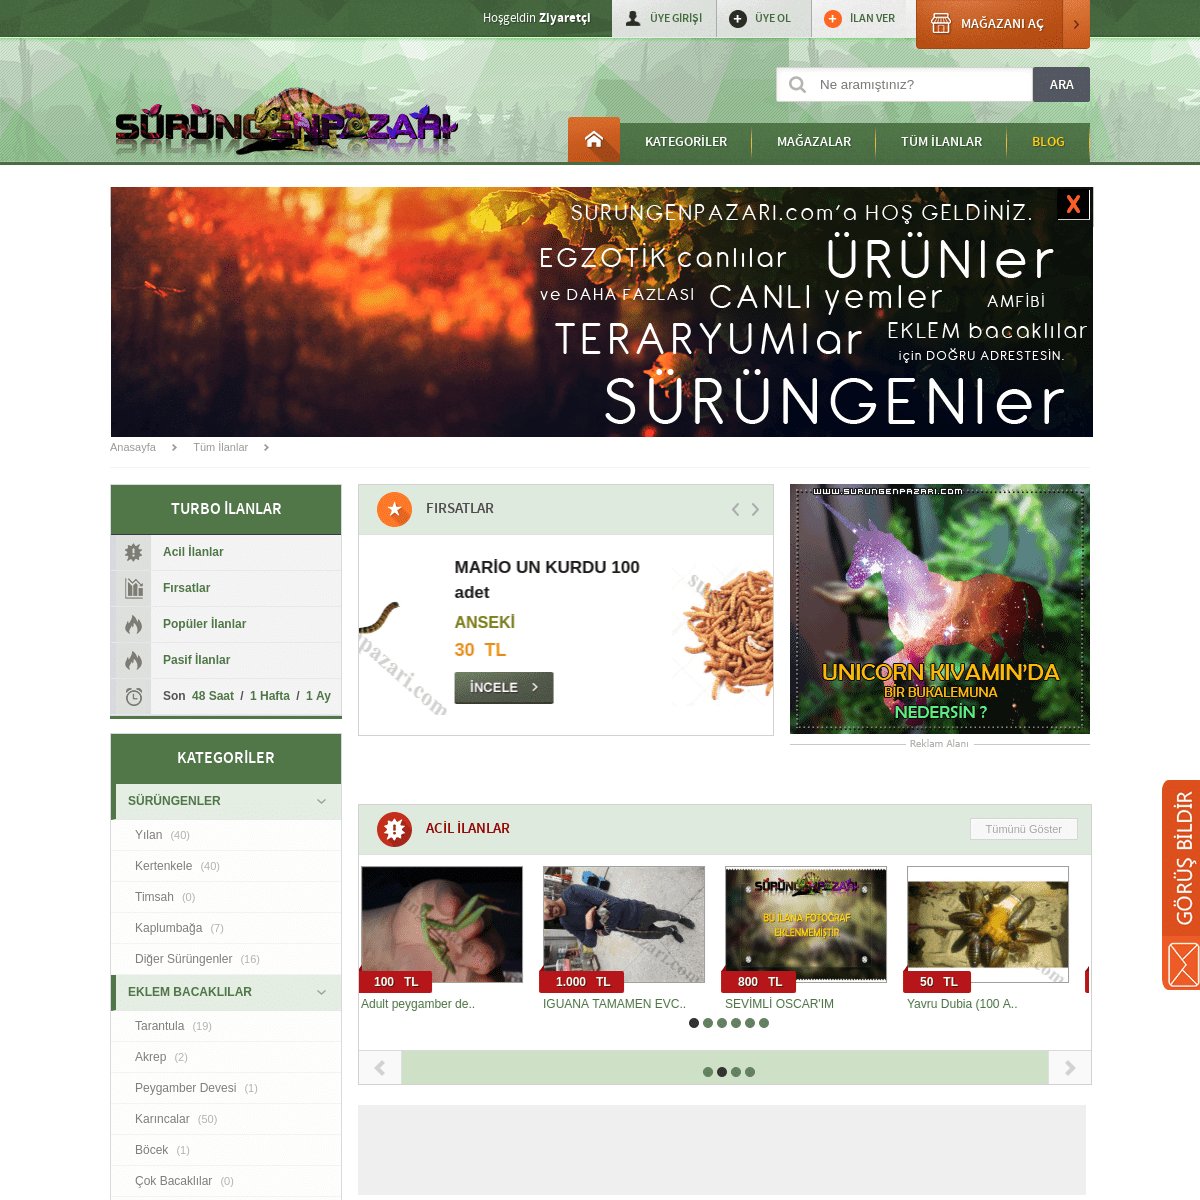 A complete backup of surungenpazari.com